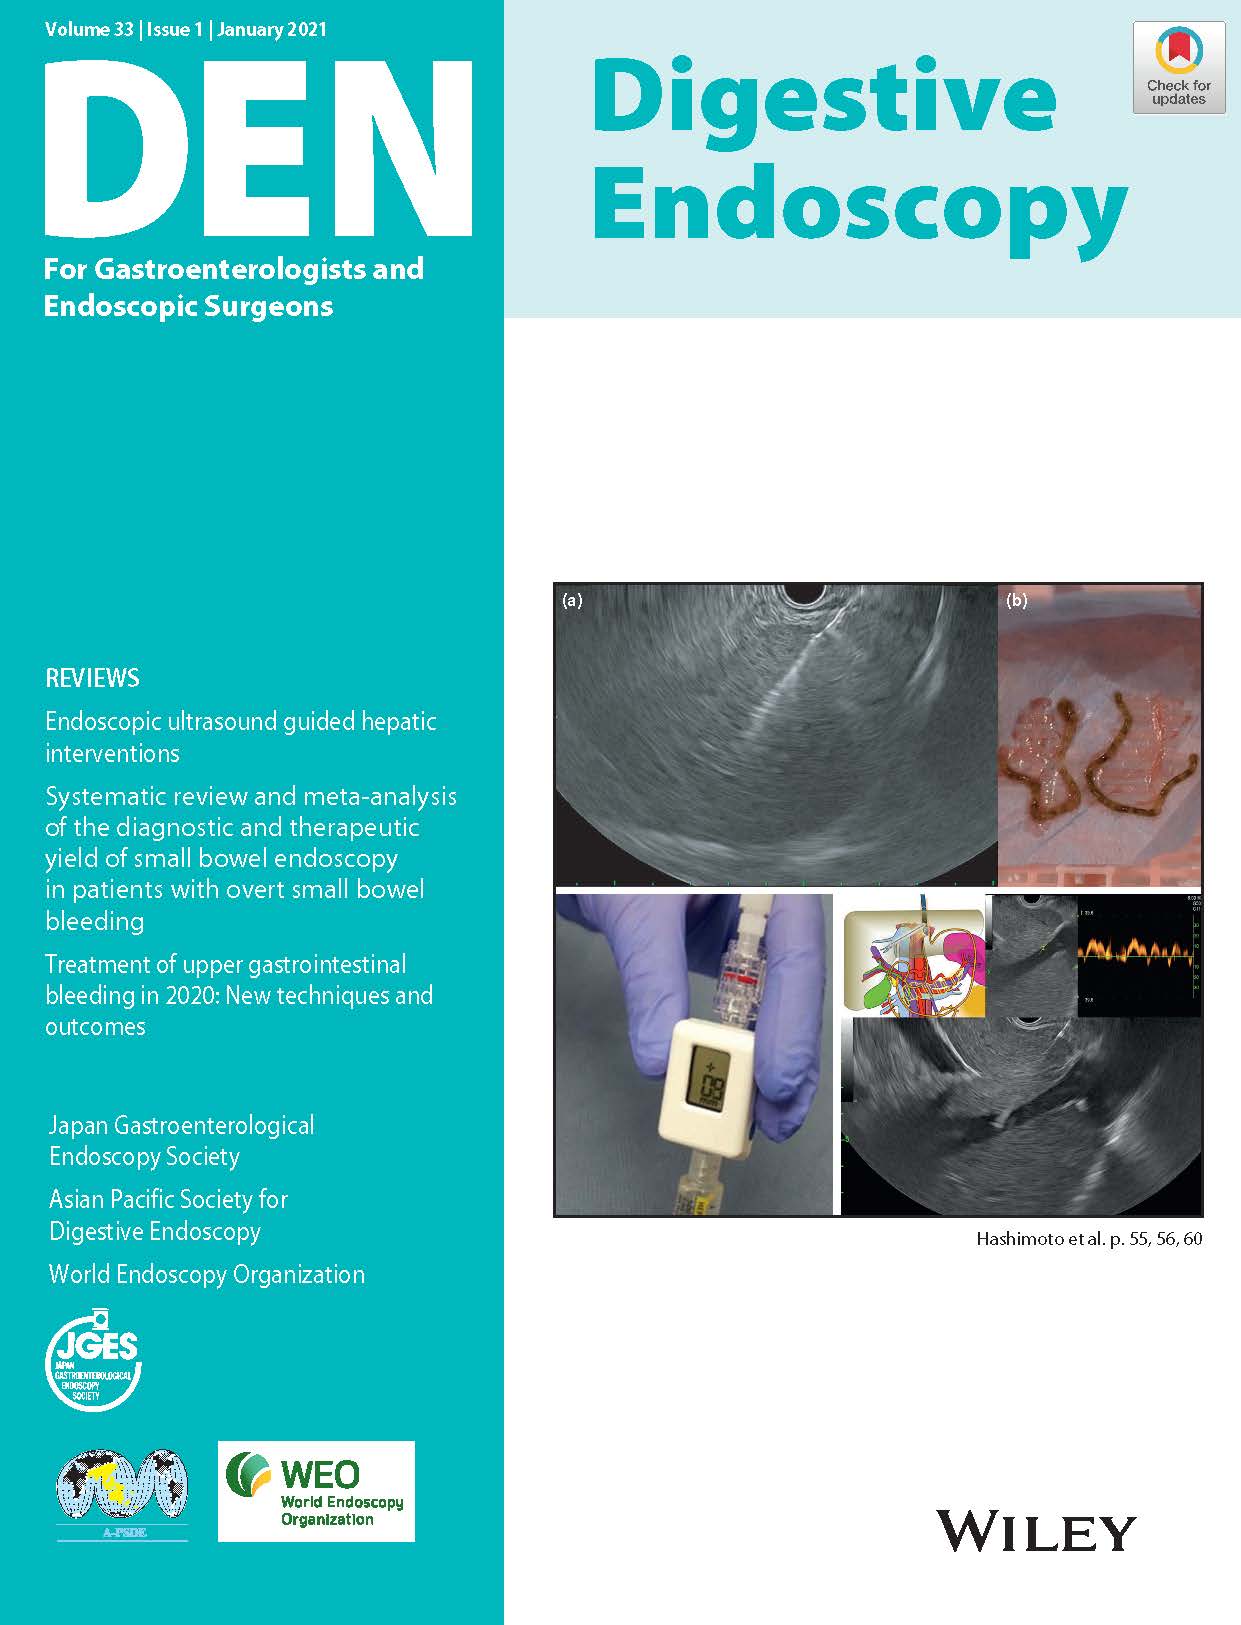 Digestive Endoscopy Vol33-1